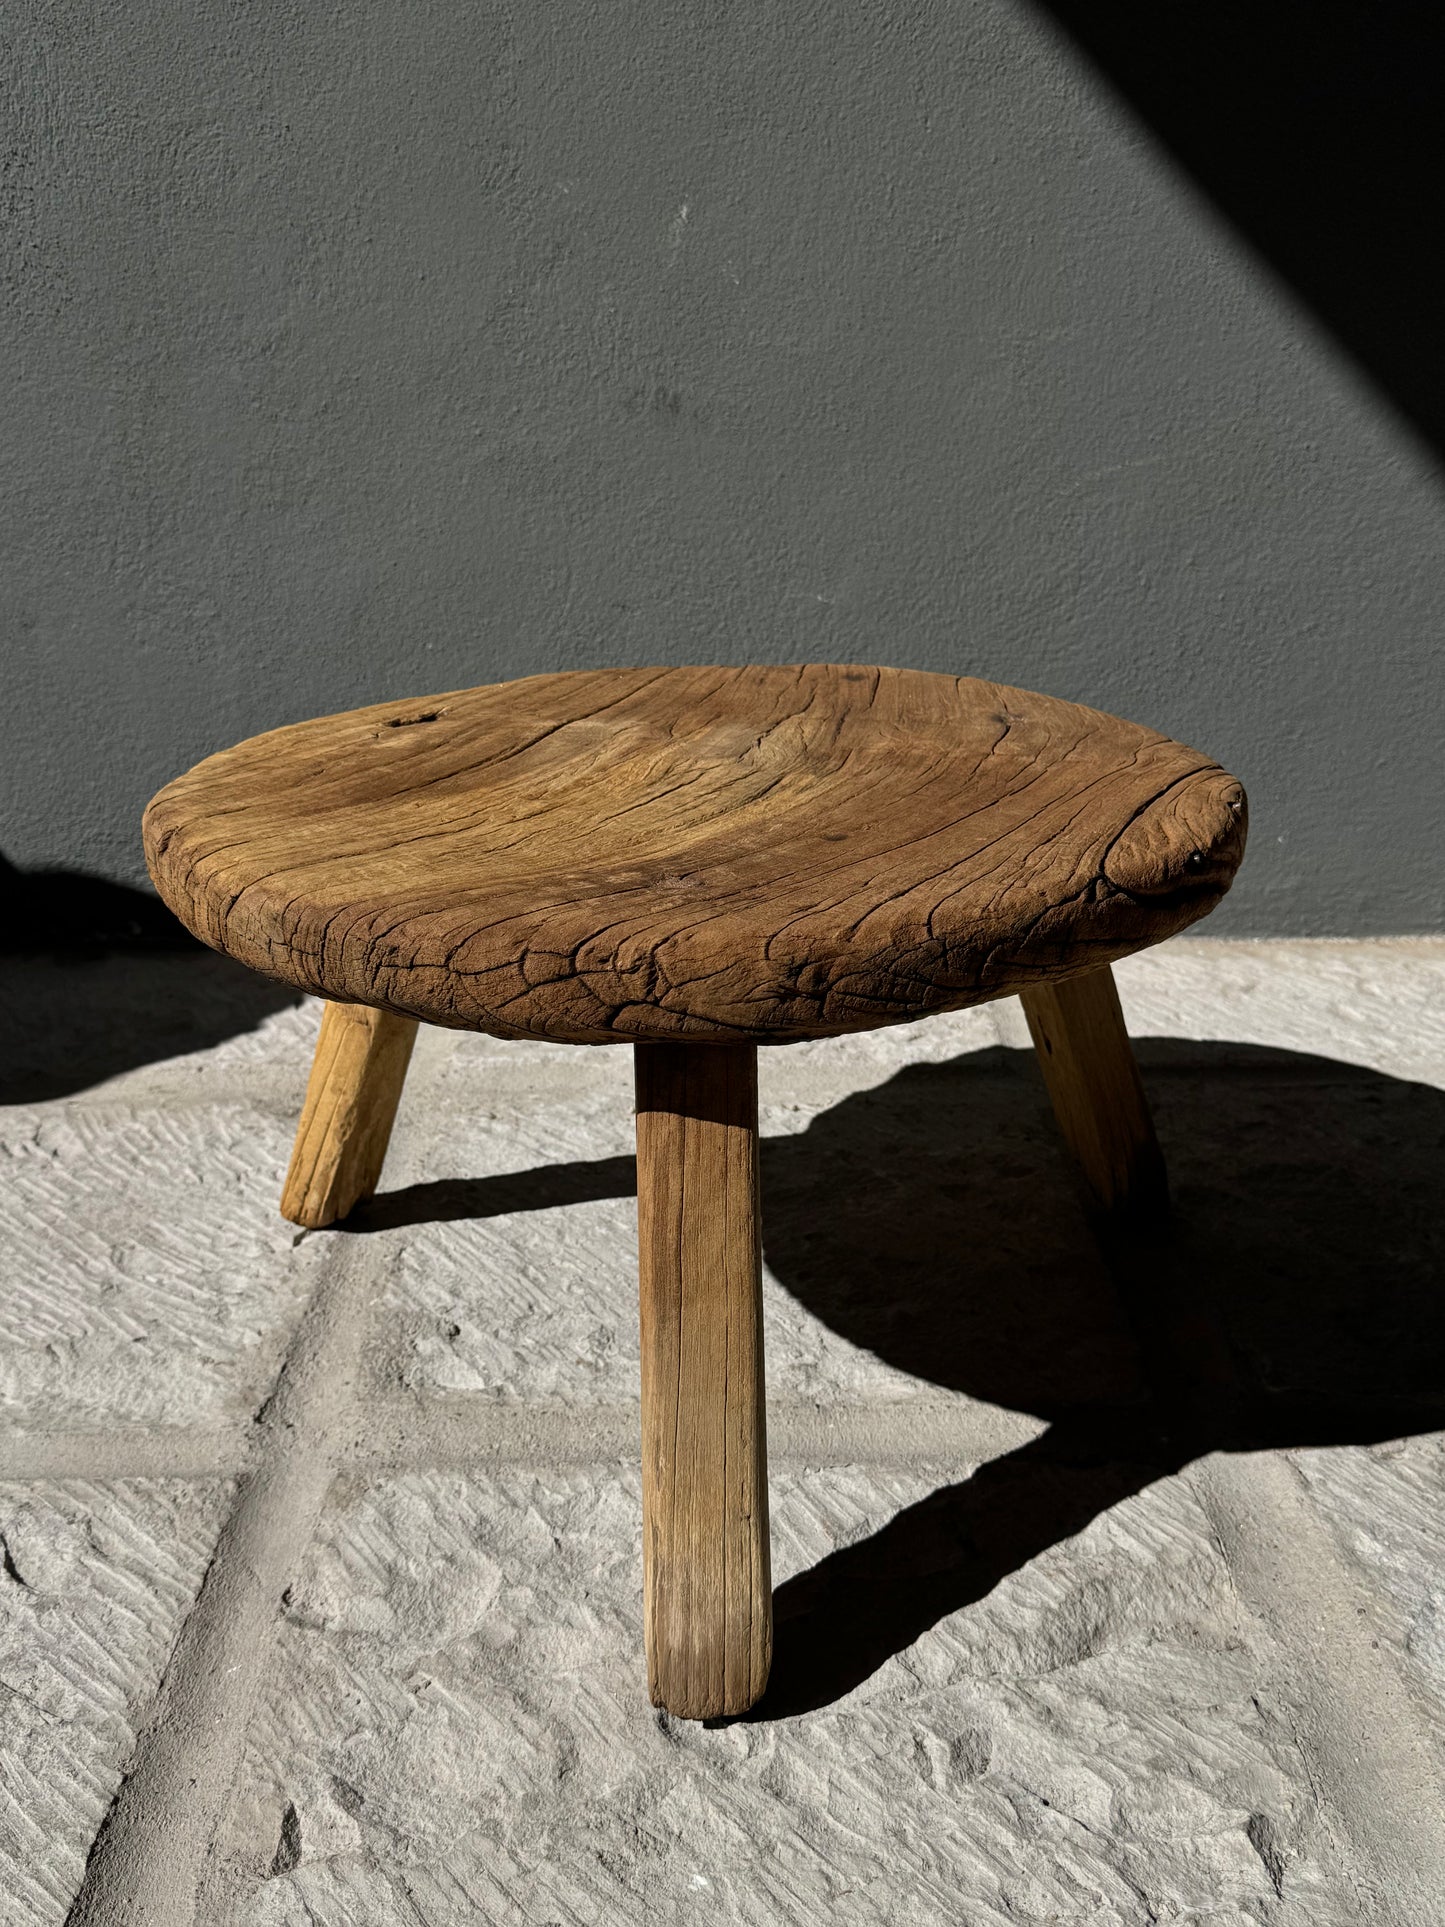 Primitive Cedar Round Table From Central Yucatán